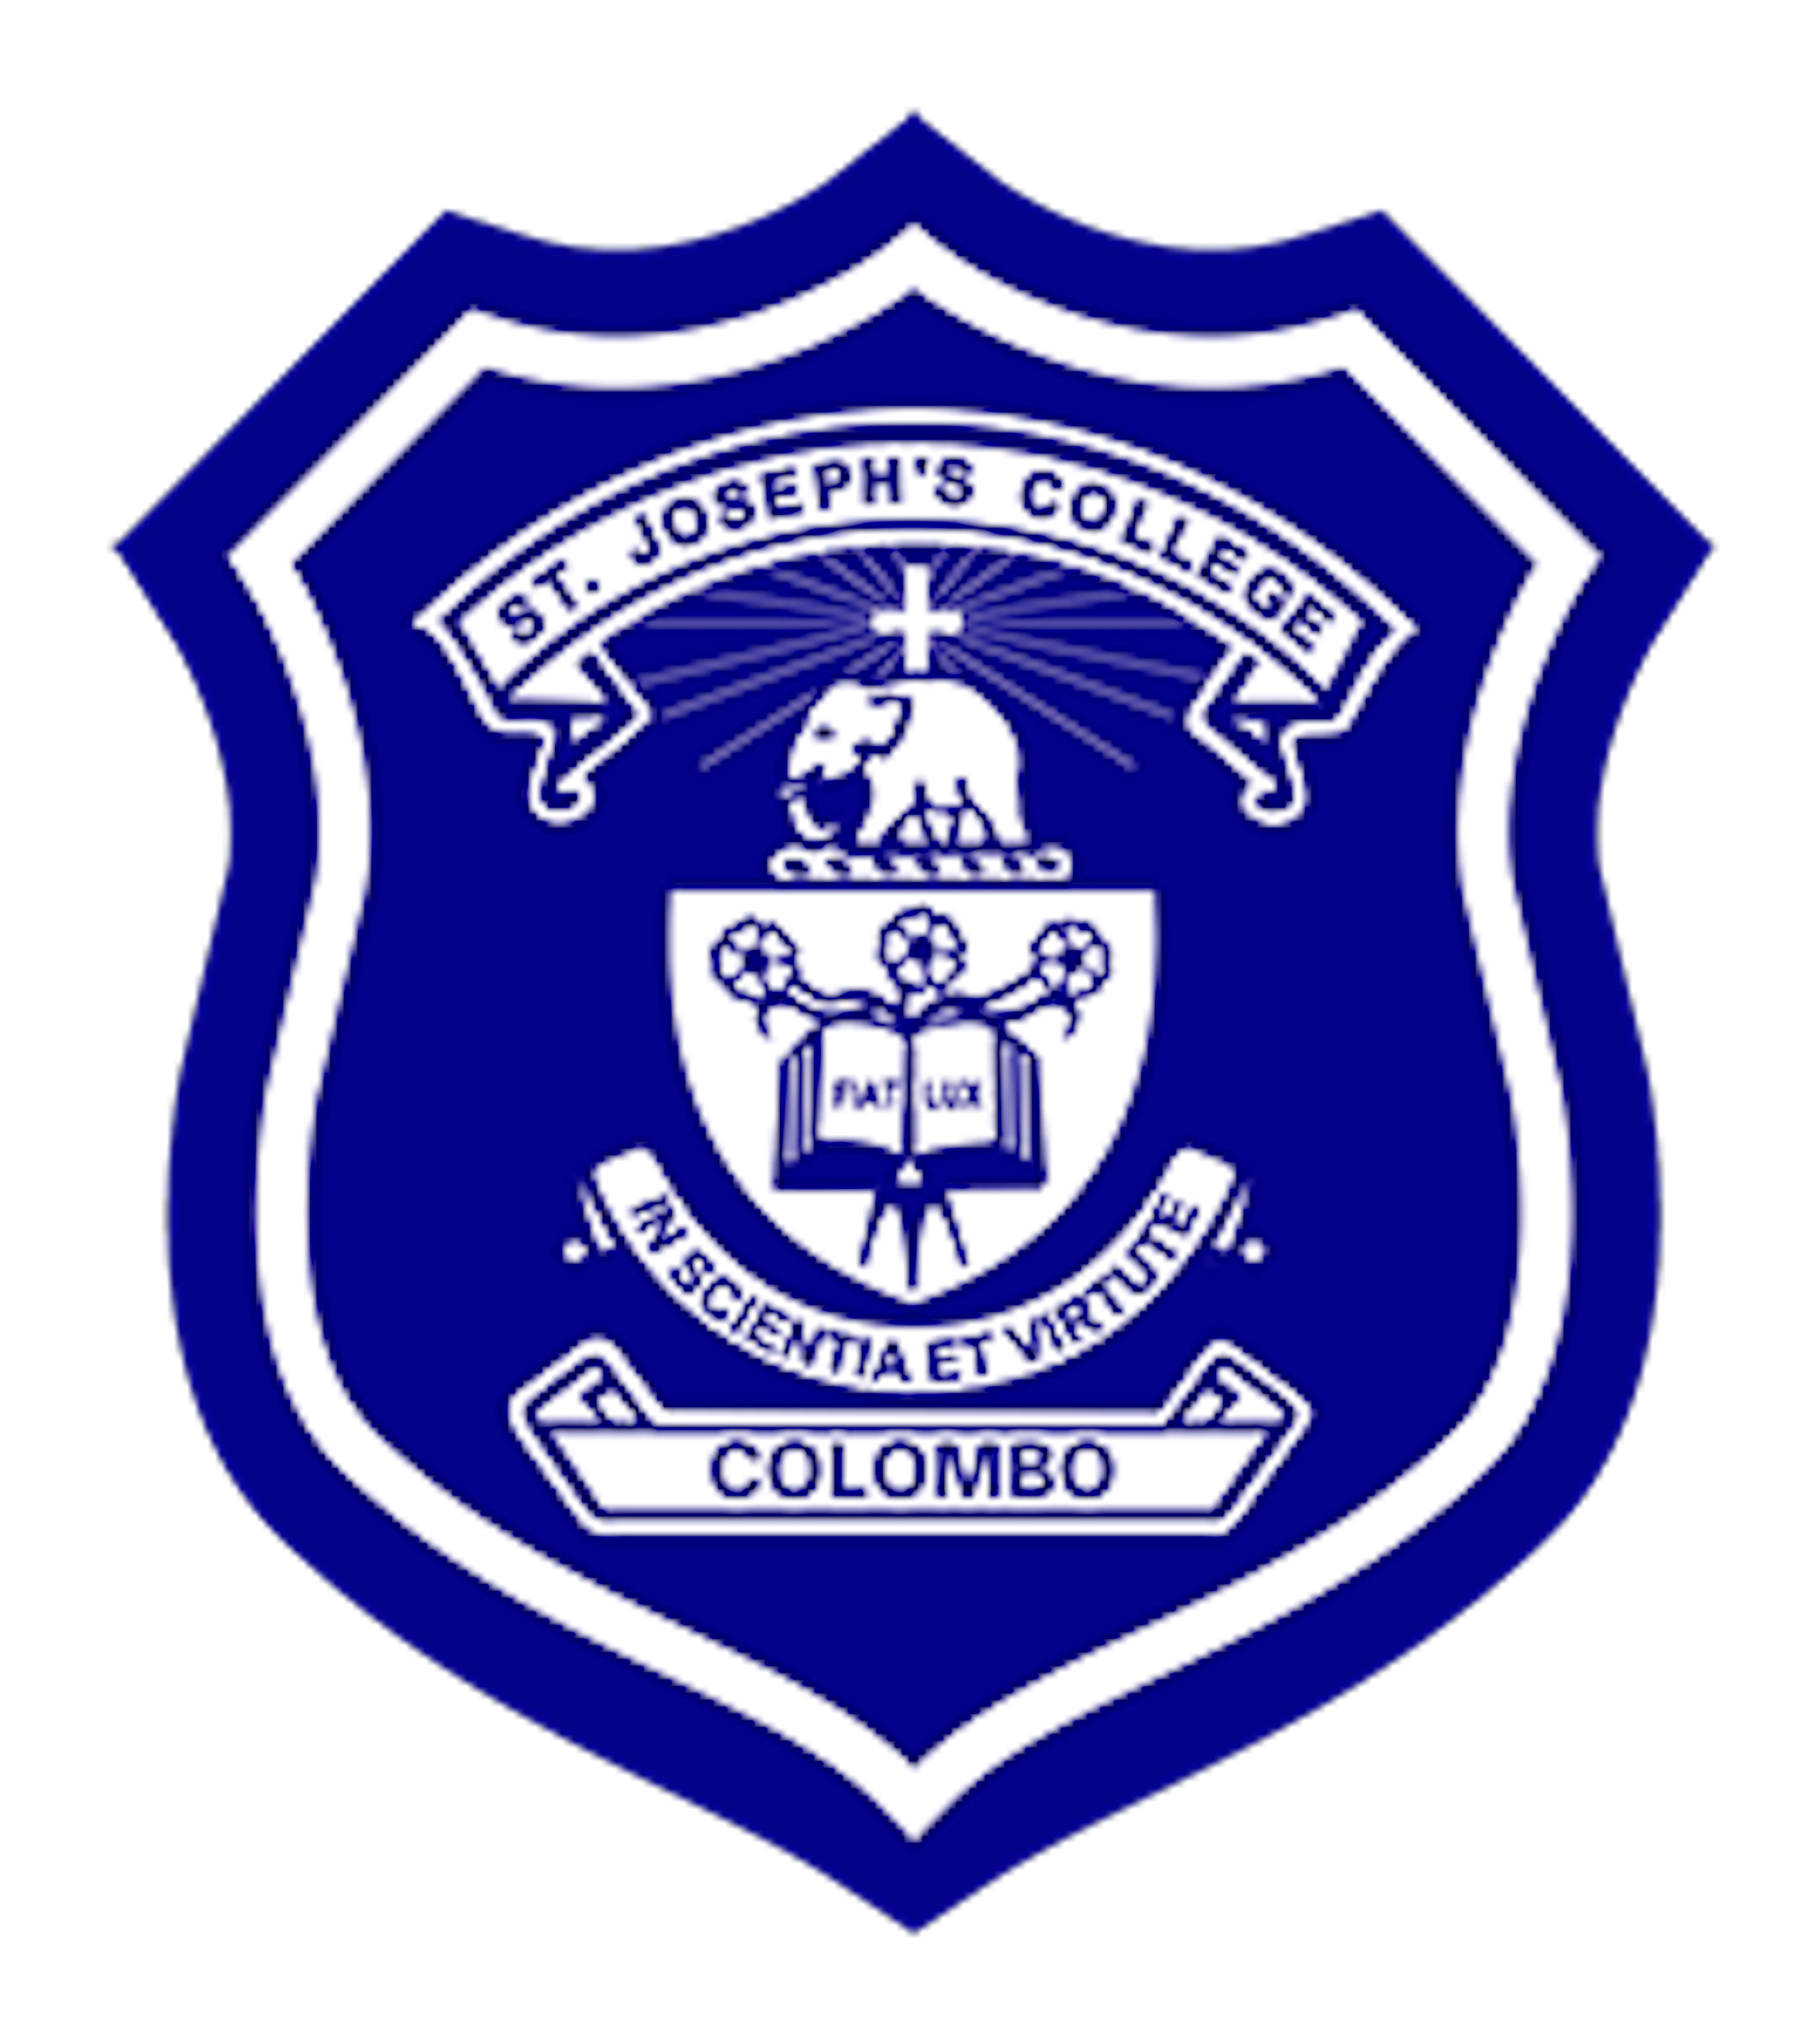 St. Joseph's College, Colombo 10